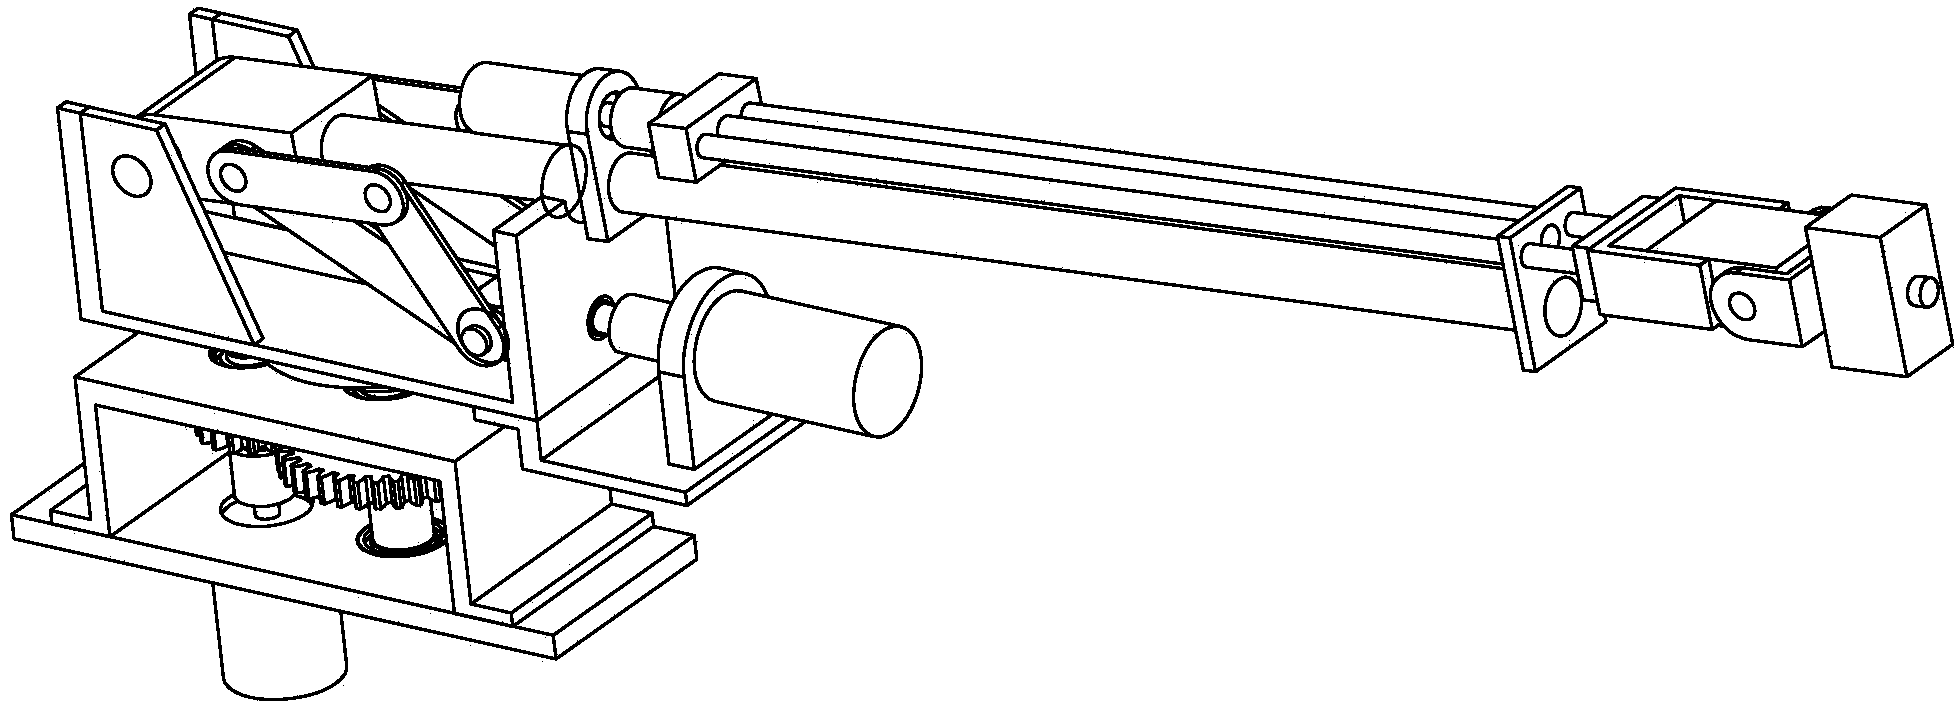 Folding type probing mechanical arm based on triangular configured connecting rod transmission